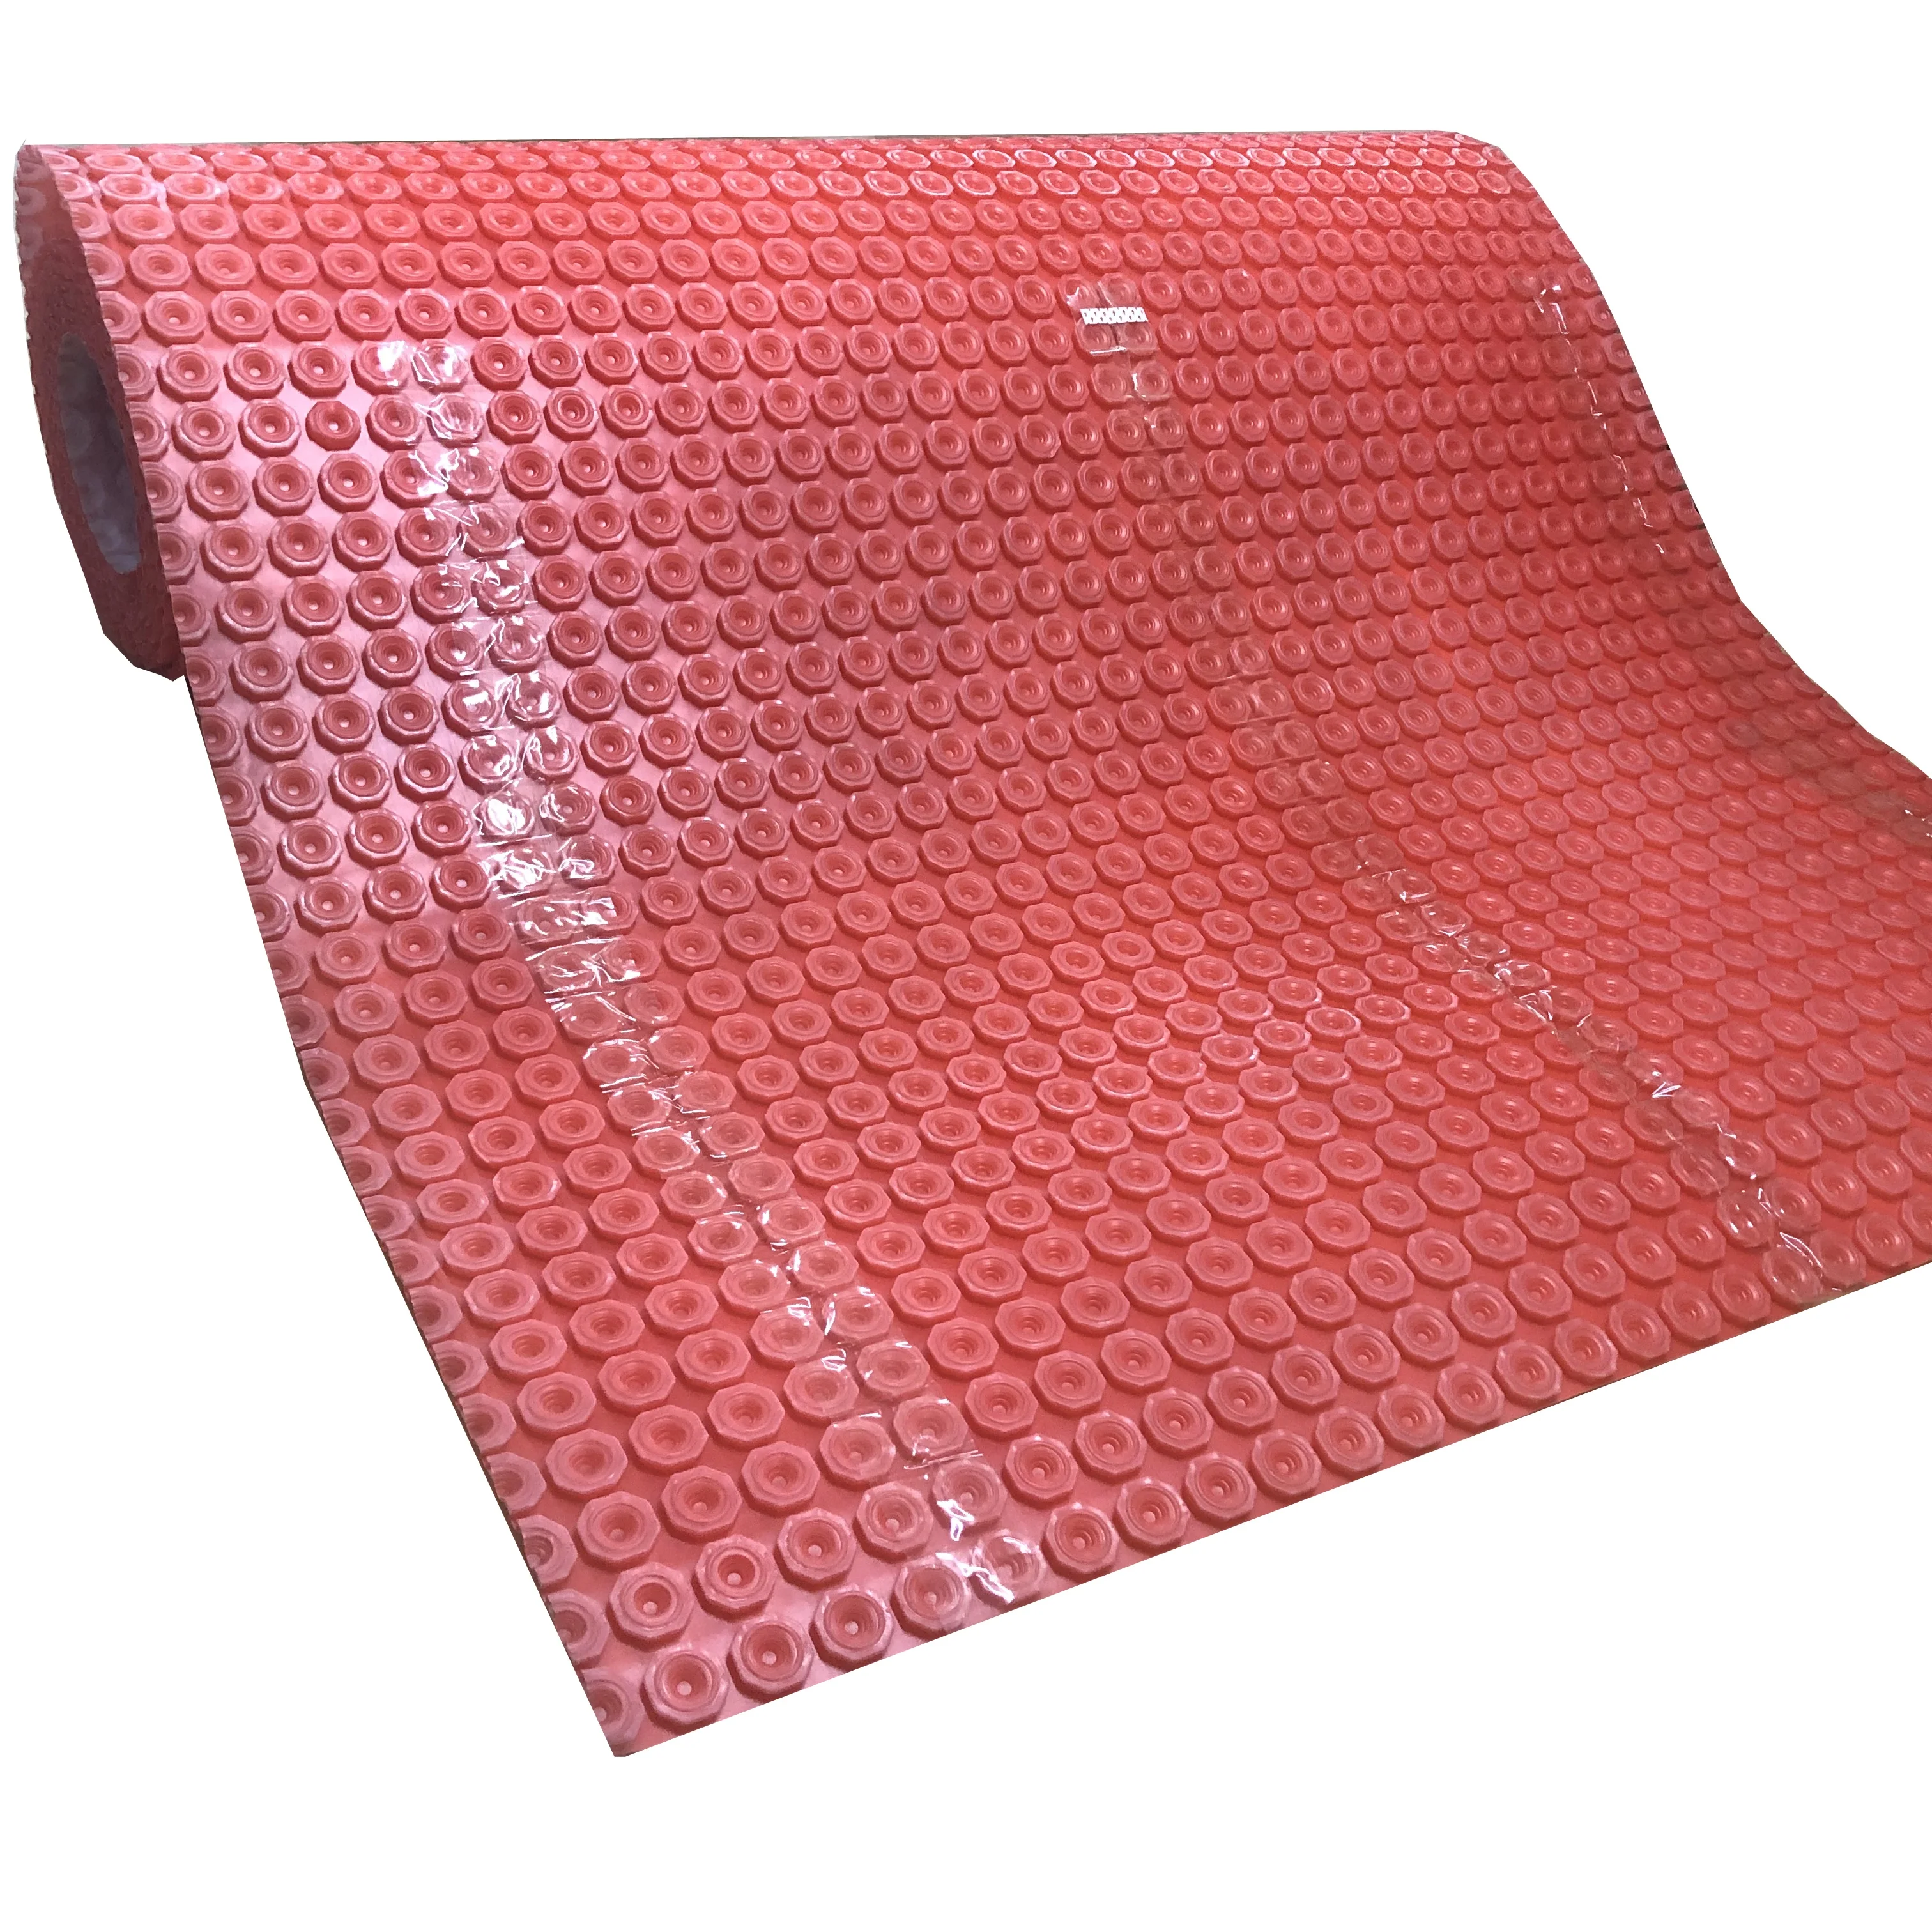 Underfloor heated cable  floor heating underlay membrane  electric heating mat